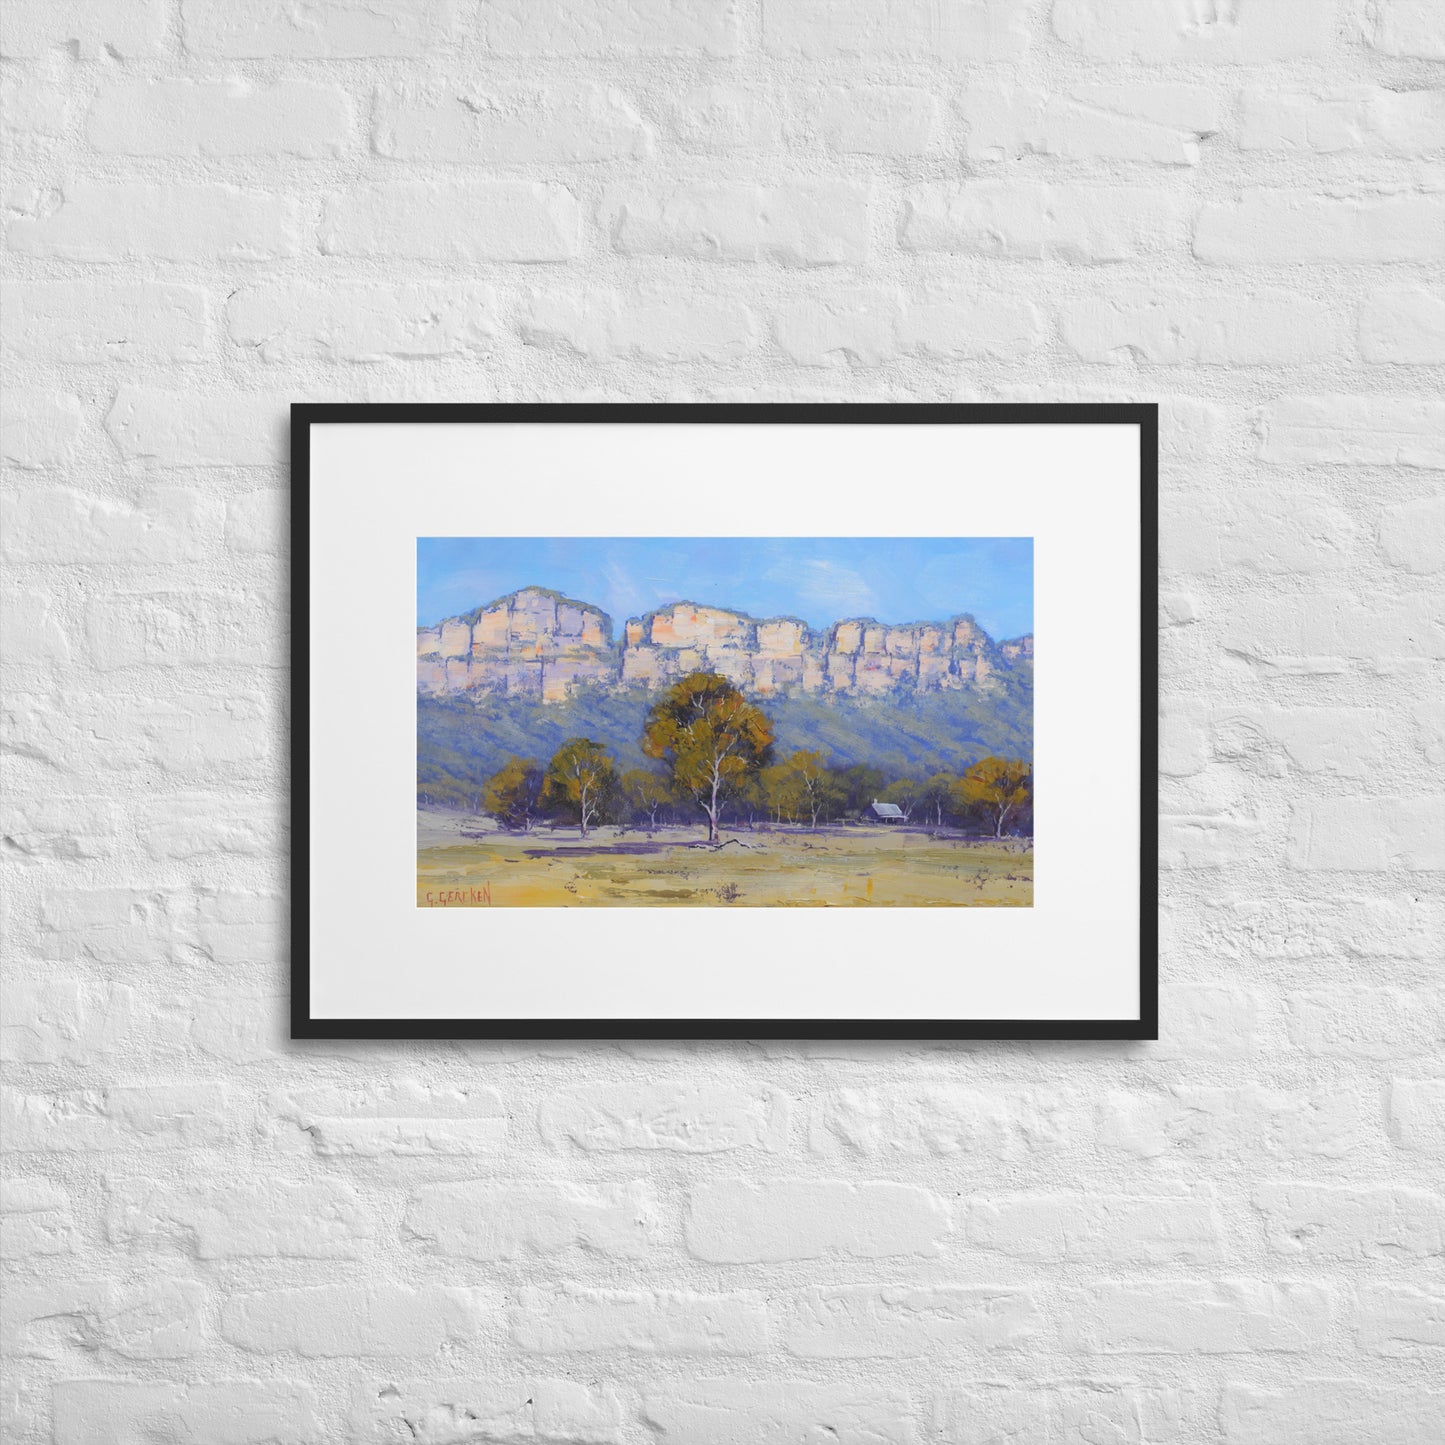 Mountain Landscape Capertee Cliffs Framed Print With Mat